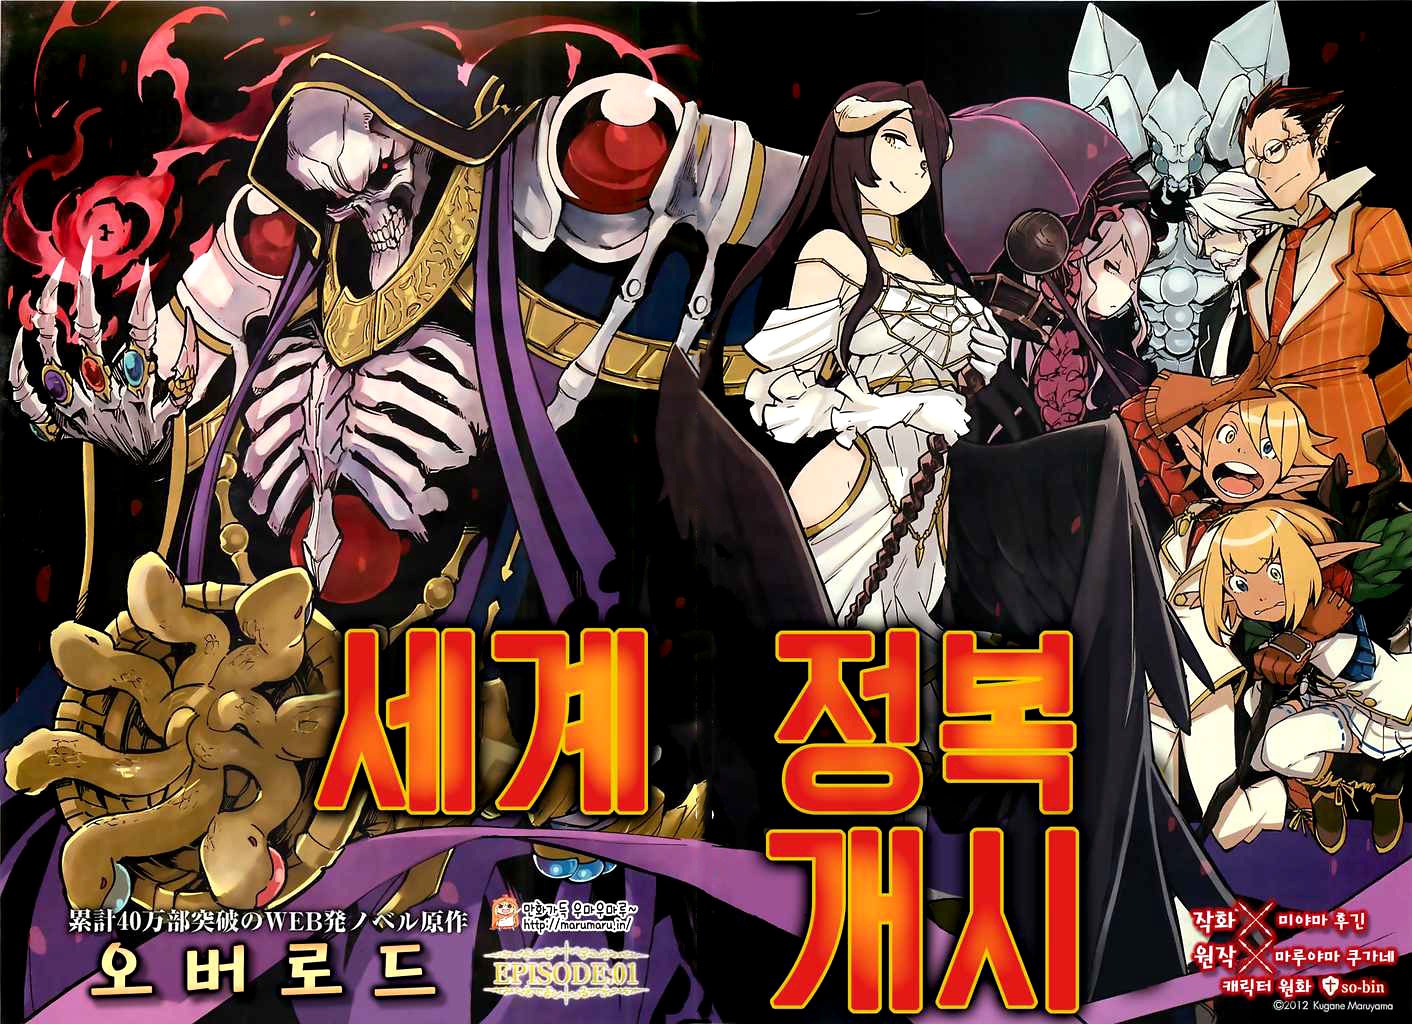 Overlord Art Gallery | Anime, Manga anime, Manga